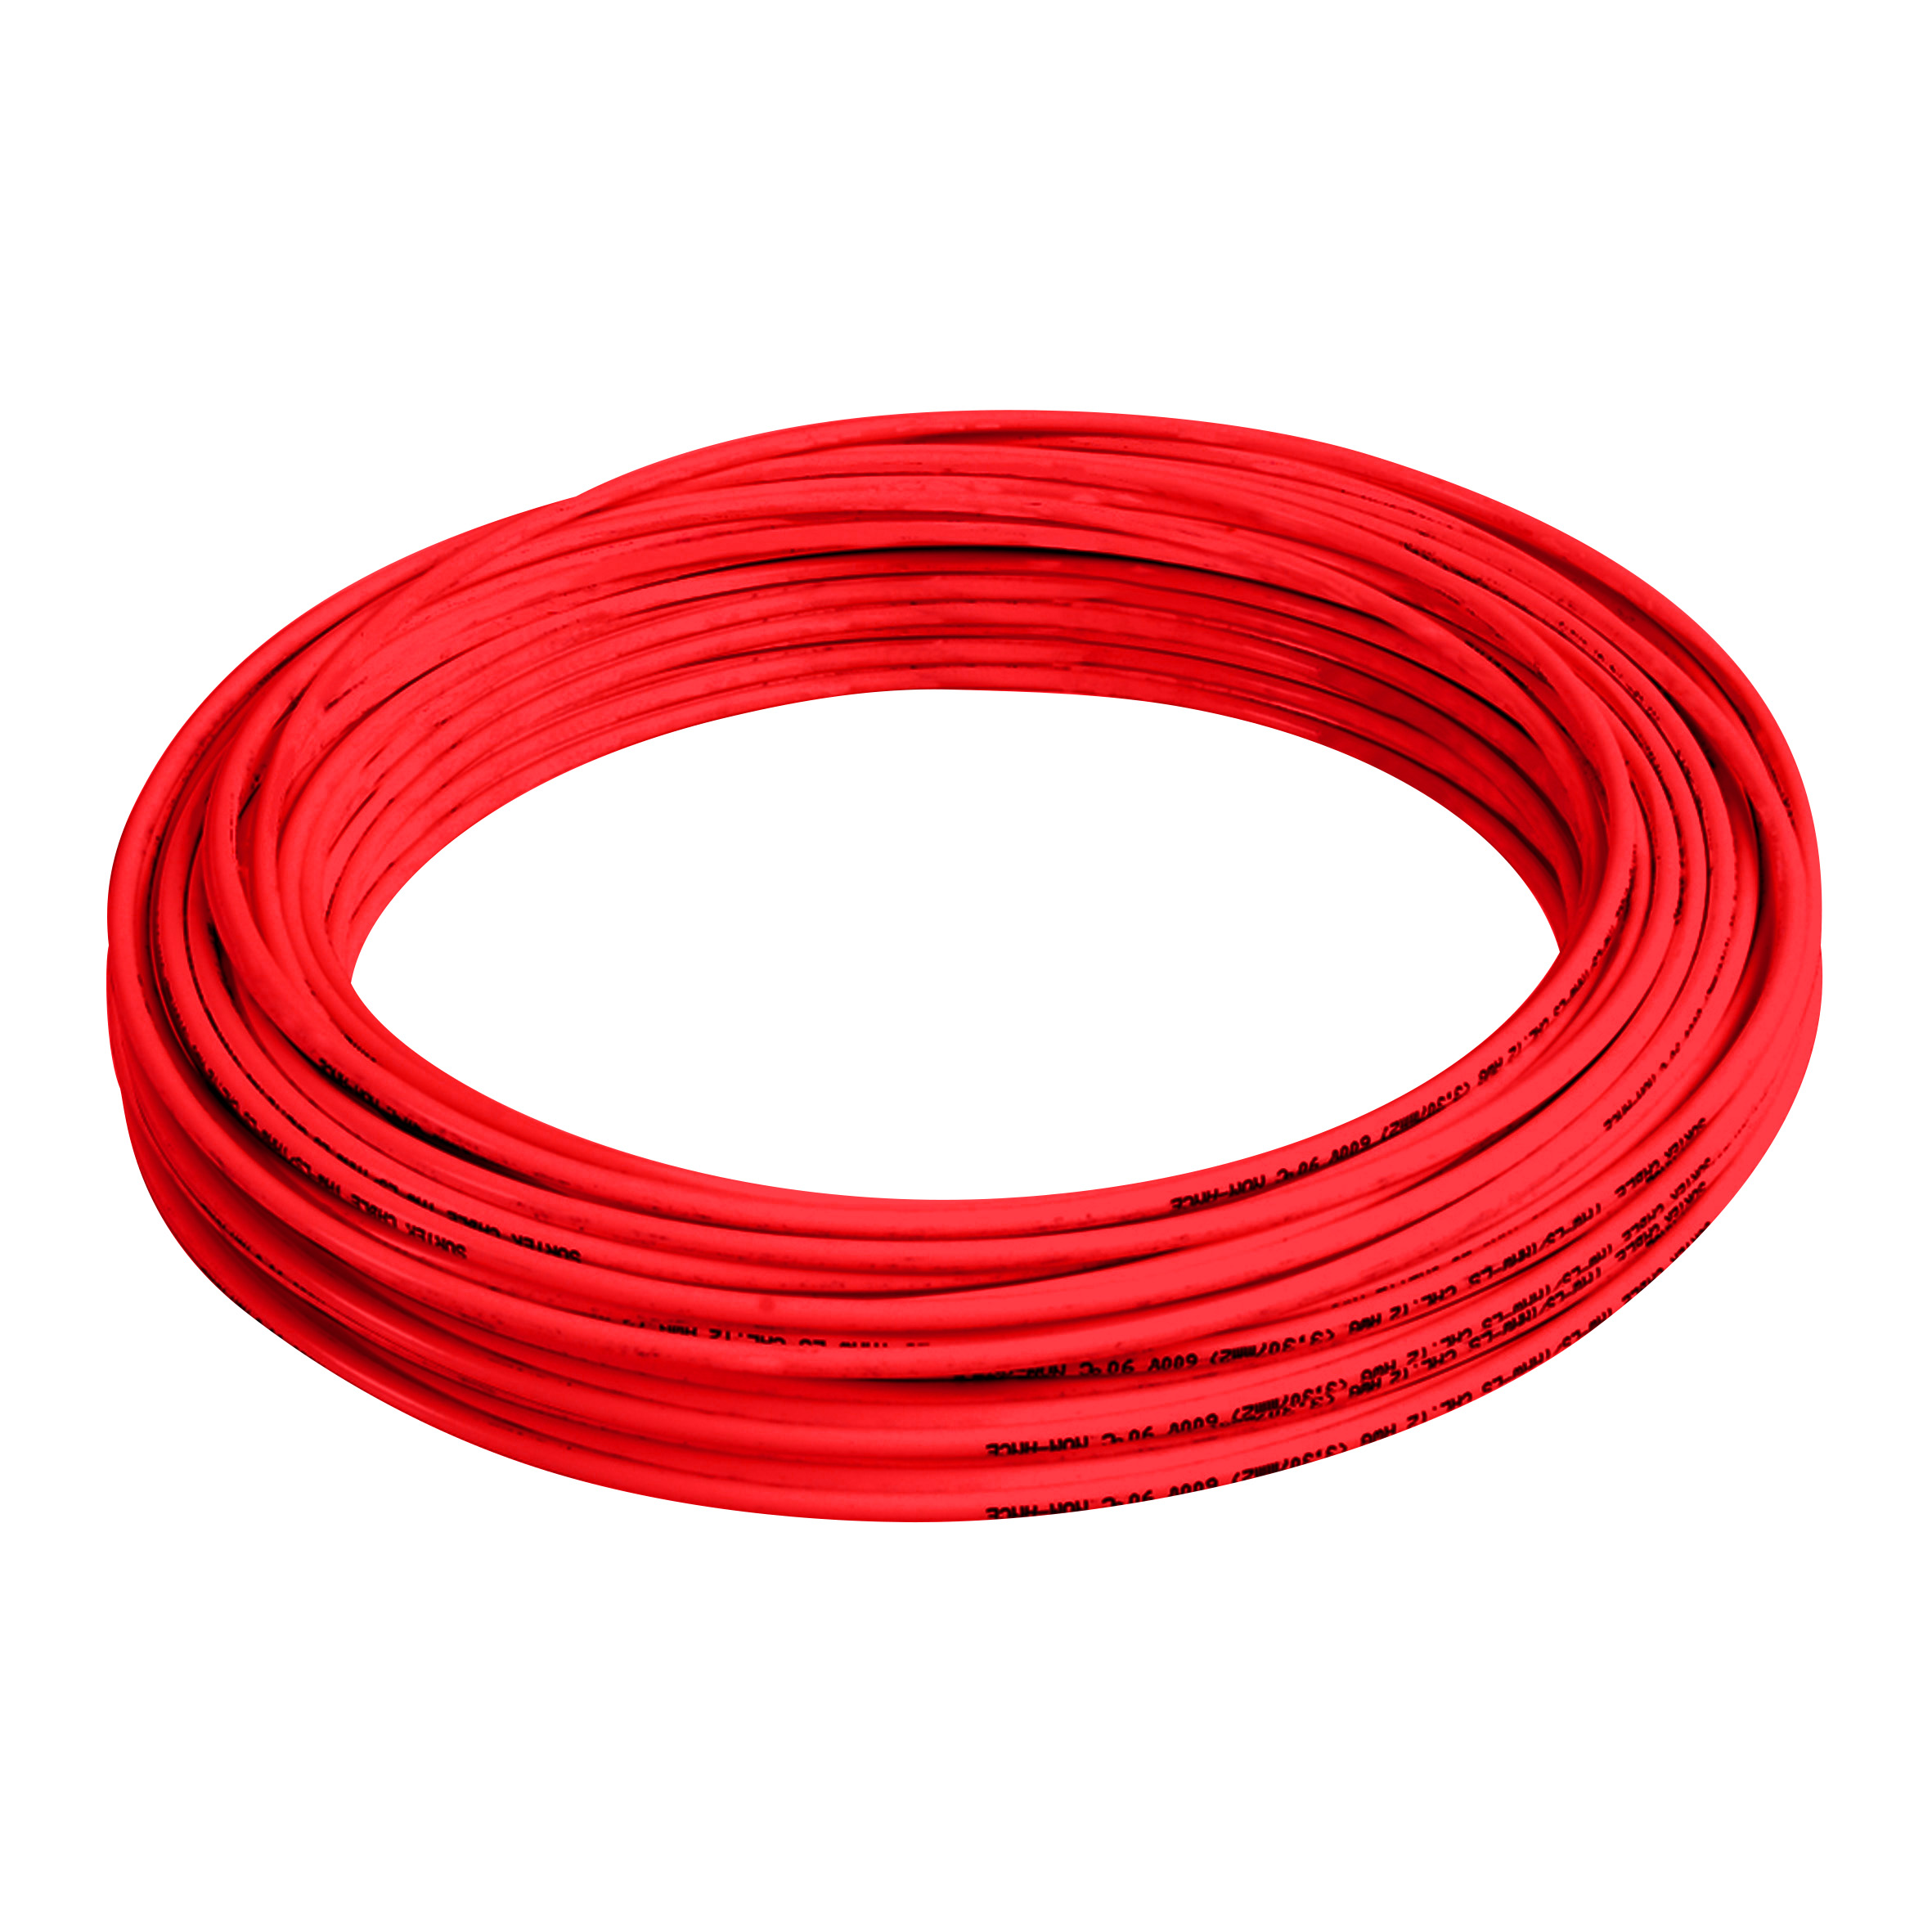 Cable eléctrico tipo THW-LS / THHW-LS Cal.8 100m rojo - Ferrecompras 